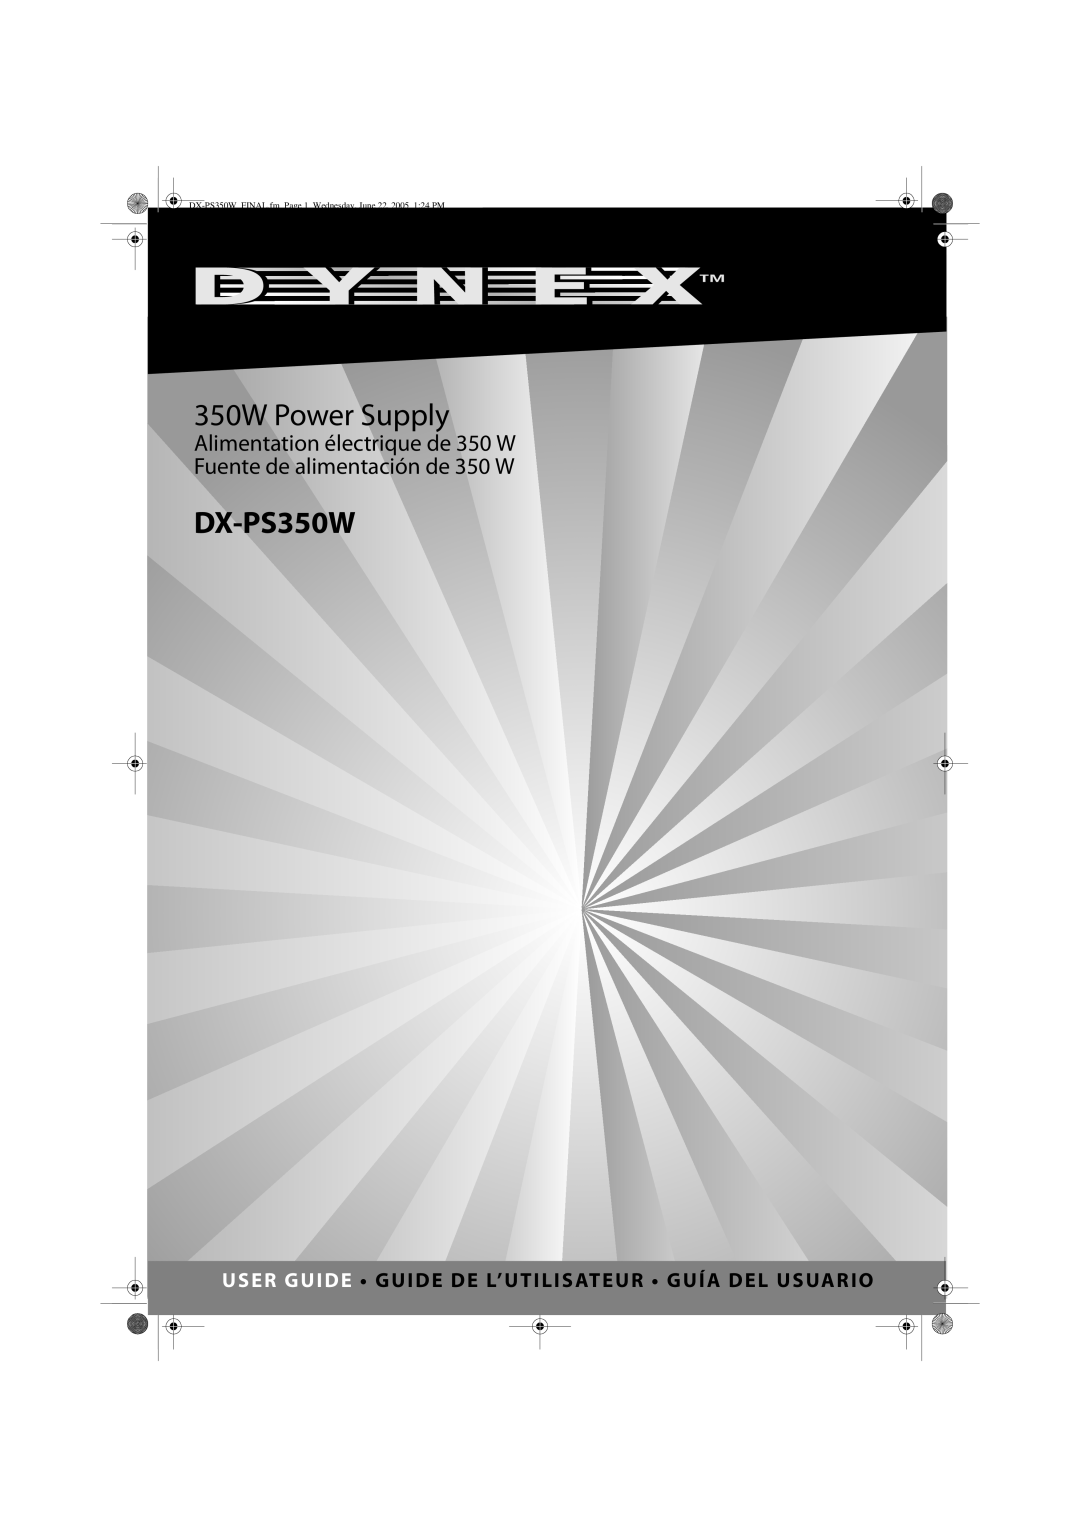 Dynex DX-PS350W manual 350W Power Supply, Alimentation électrique de 350 W Fuente de alimentación de 350 W 